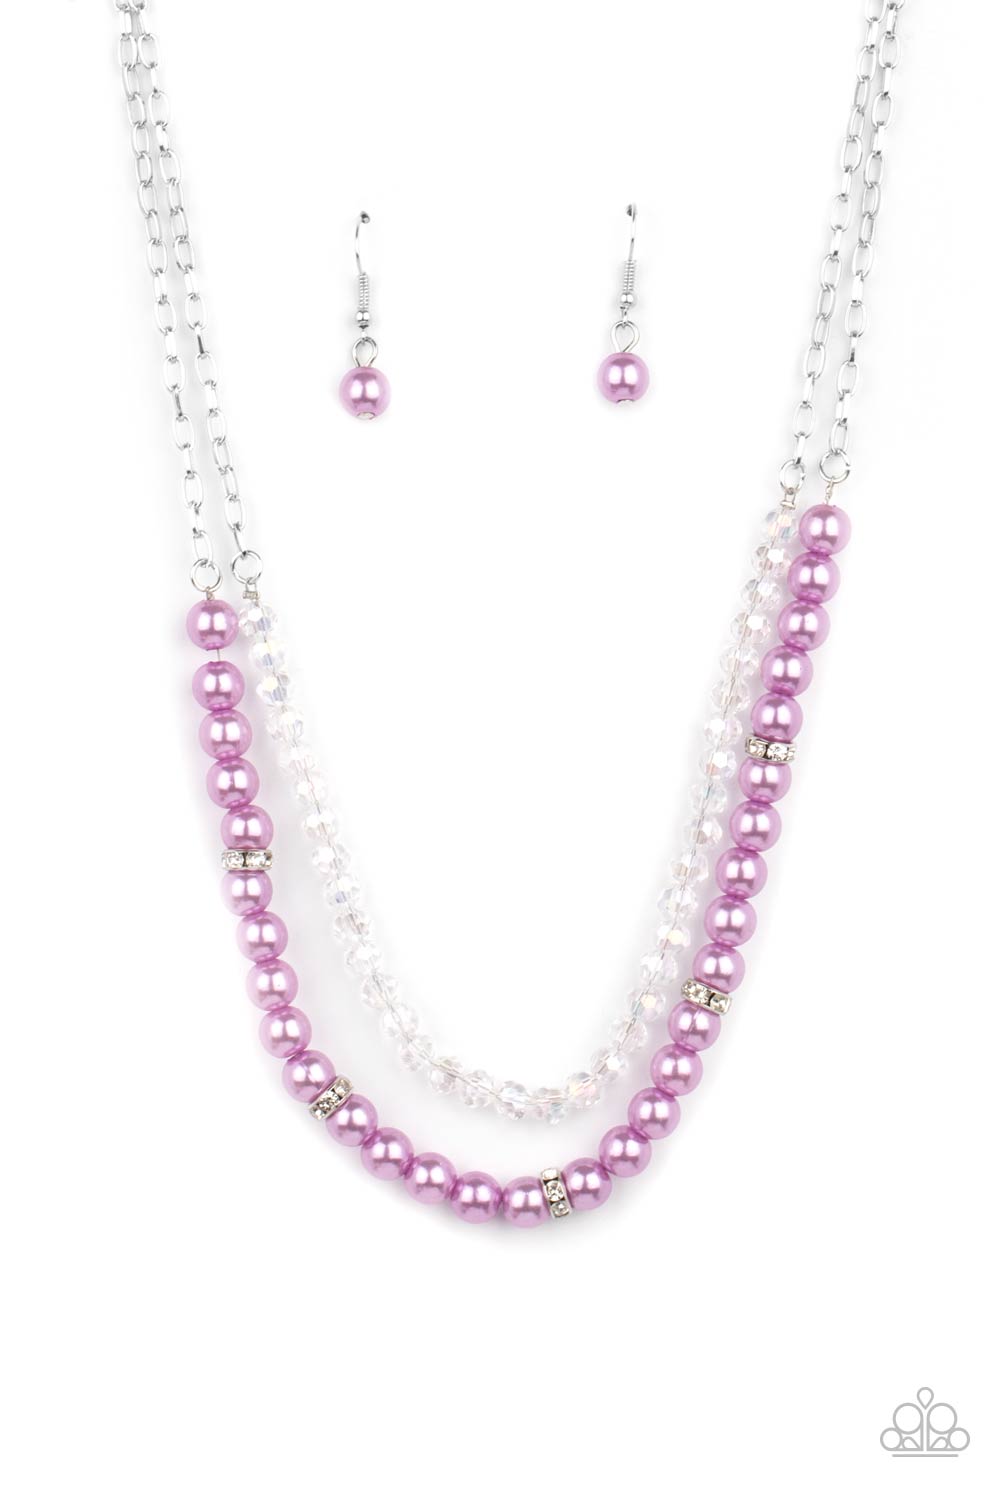 Parisian Princess - Purple Necklace Set - Princess Glam Shop